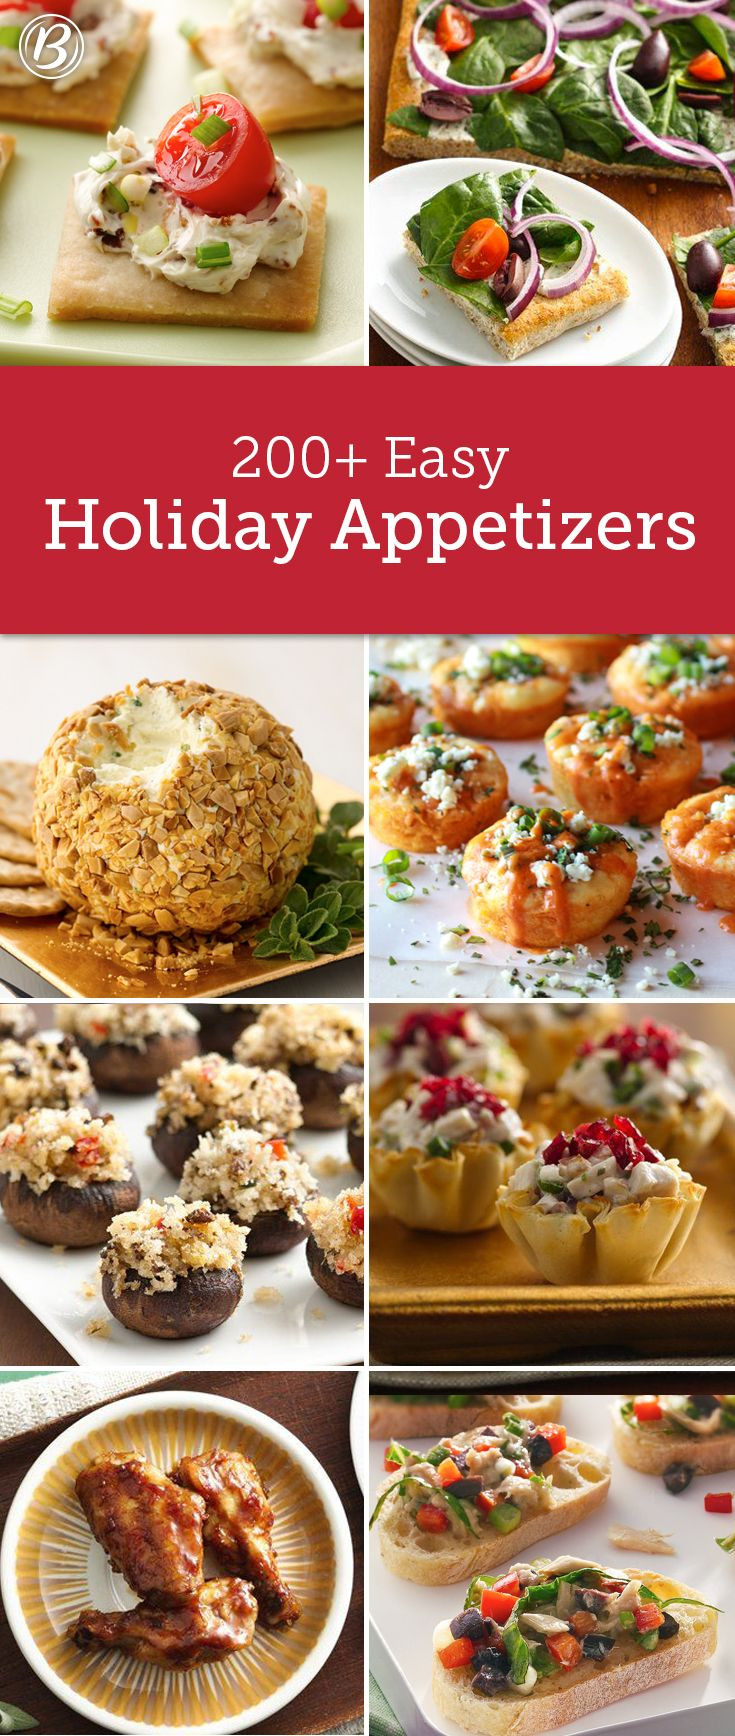 Christmas Appetizers On Pinterest
 48 best Easy Holiday Appetizers images on Pinterest